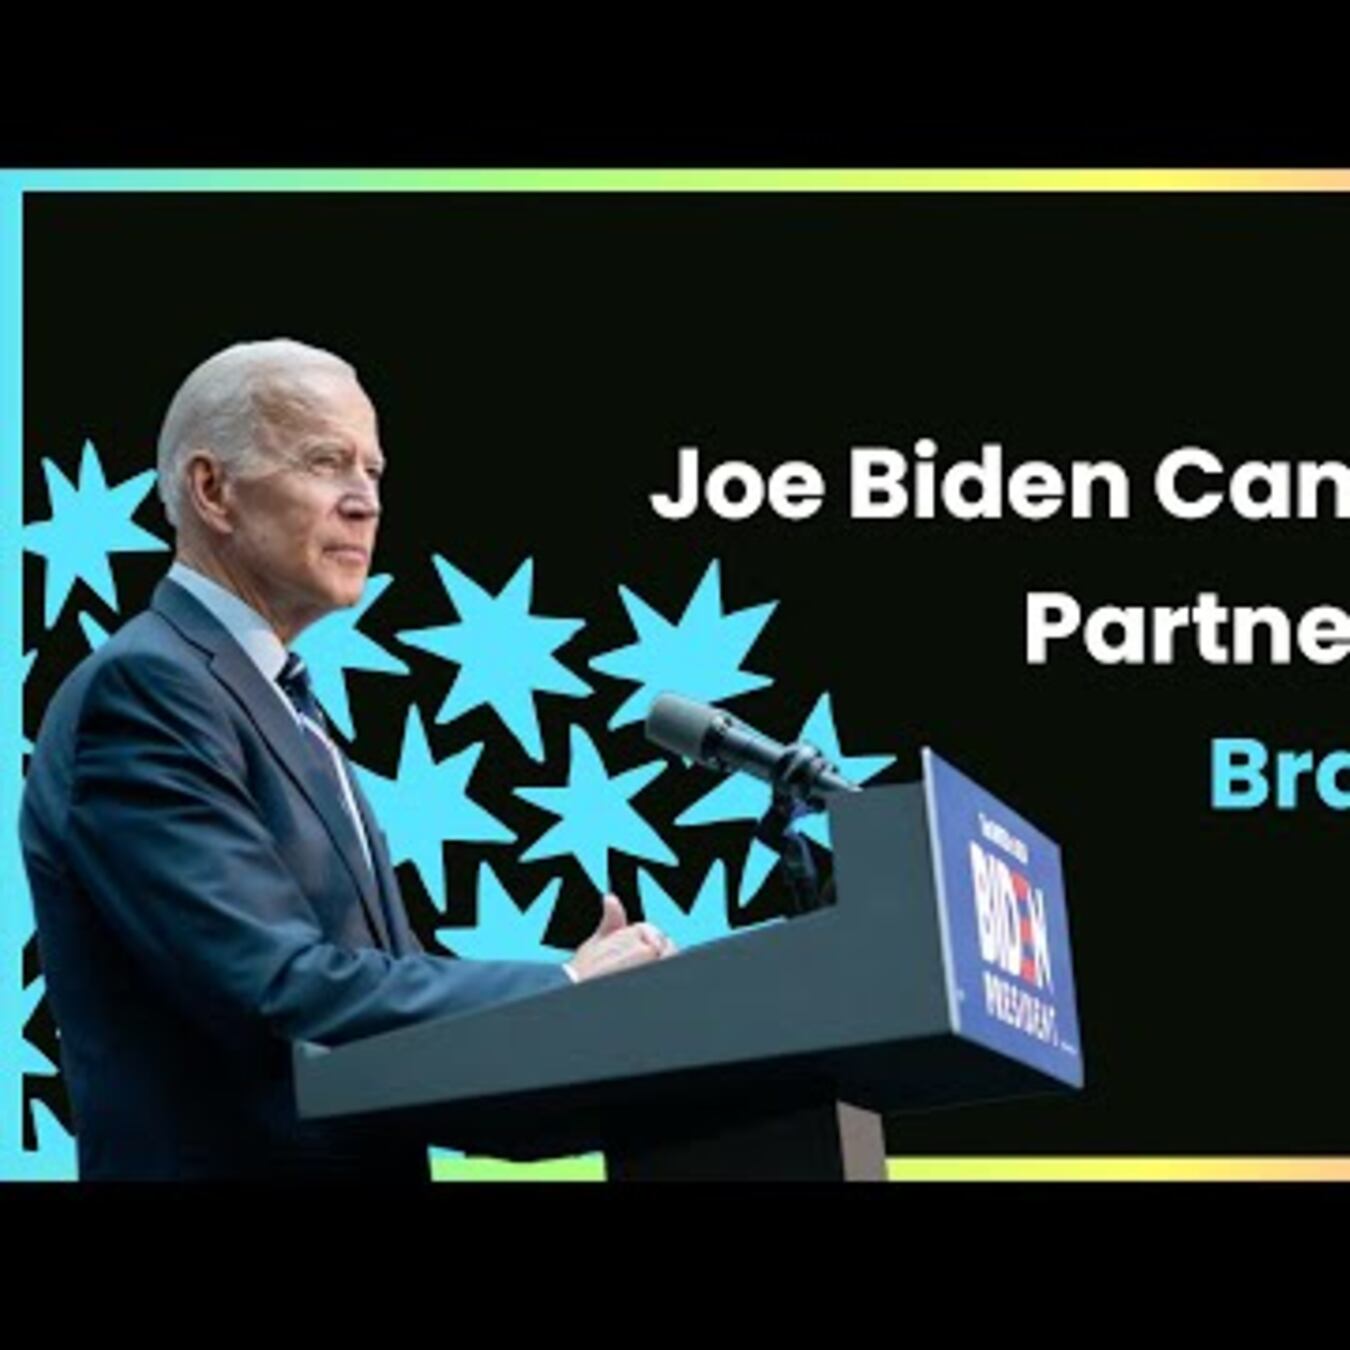 Project-Joe Biden Campaign with Brandlive